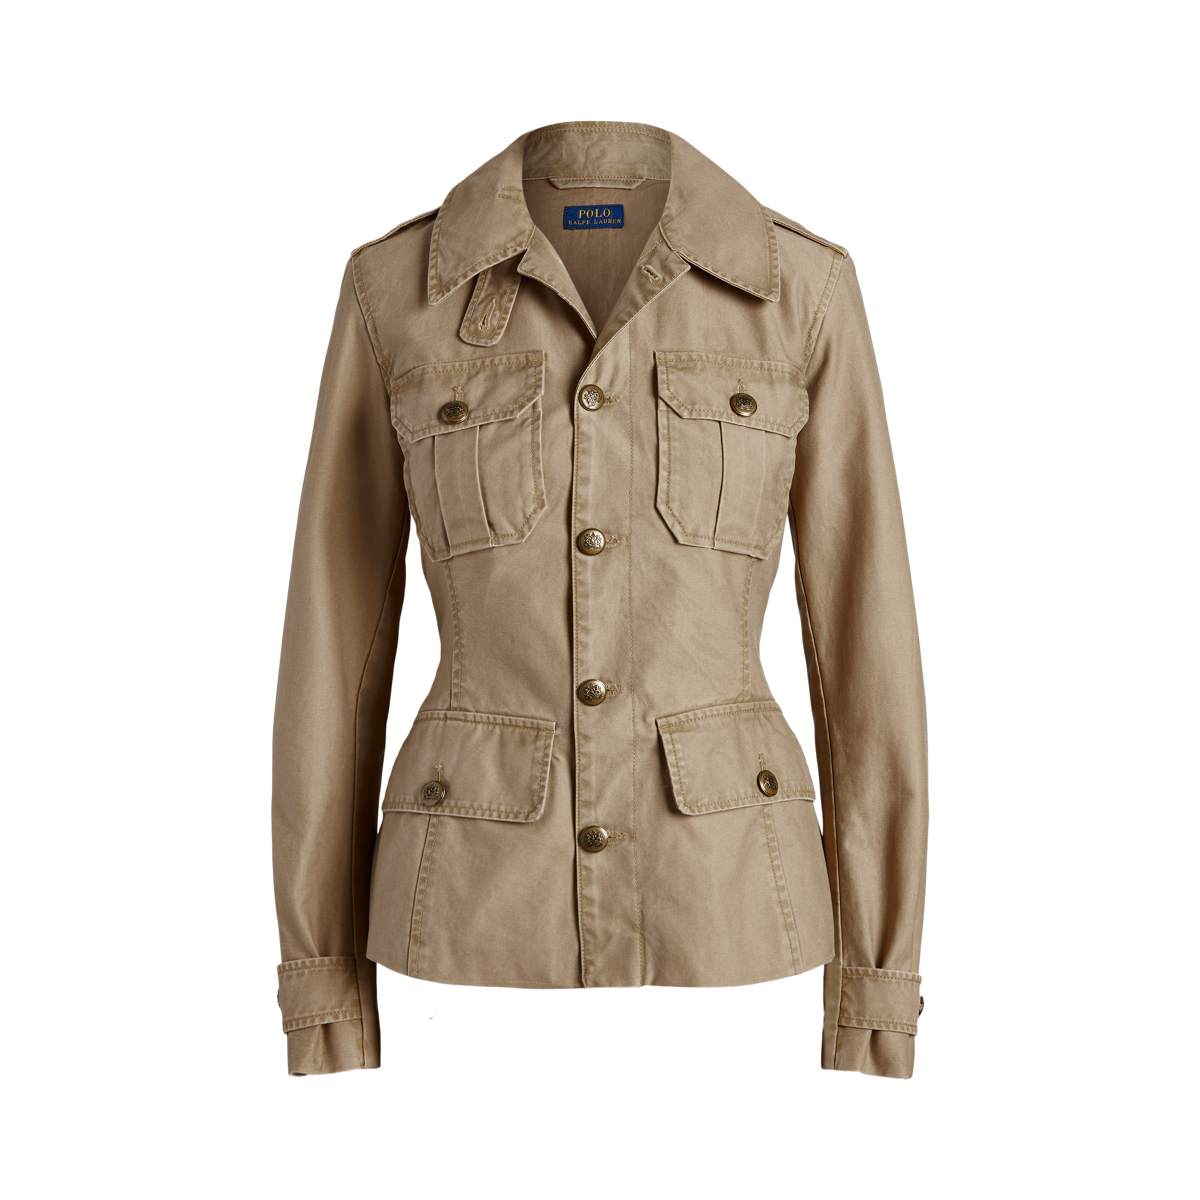 Aprender acerca 54+ imagen polo ralph lauren cotton twill surplus jacket